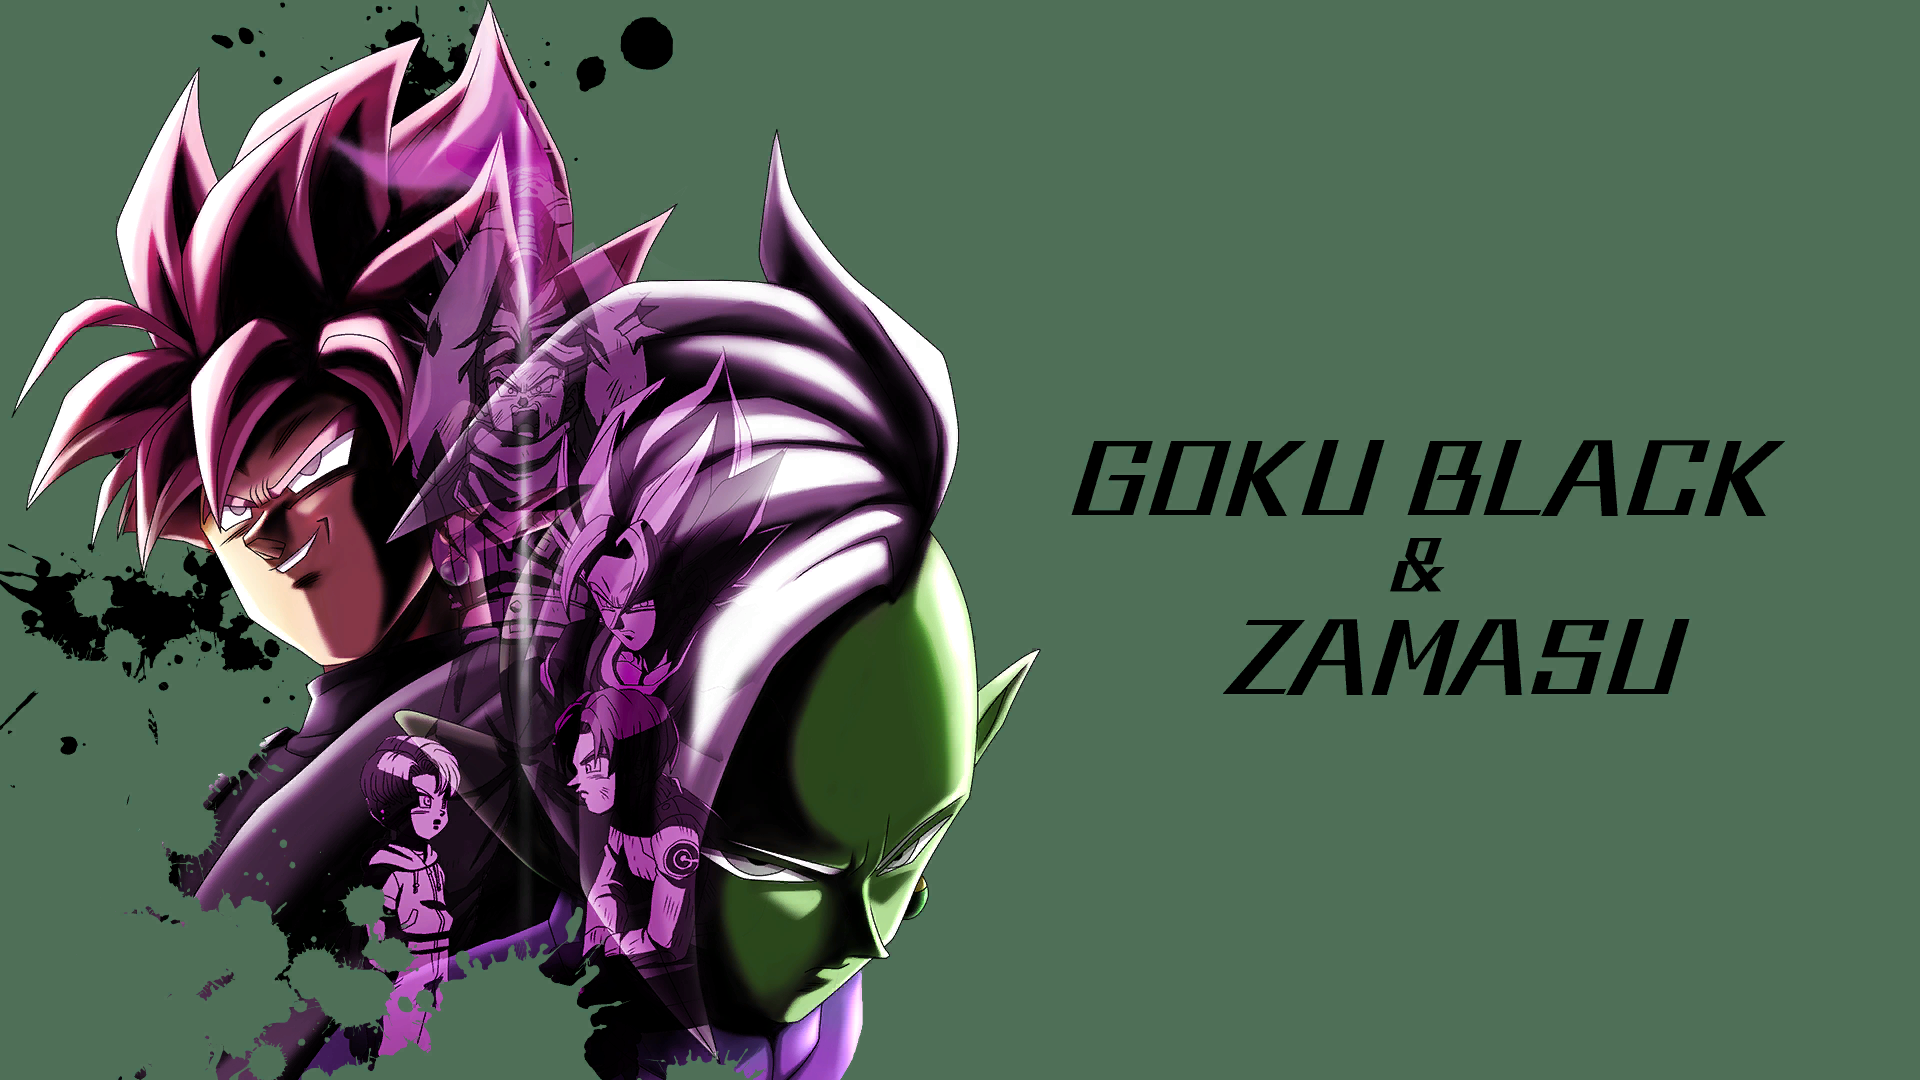 Goku Black (UI) - Dragon Ball Xenoverse 2 Mod by zFeraz on DeviantArt